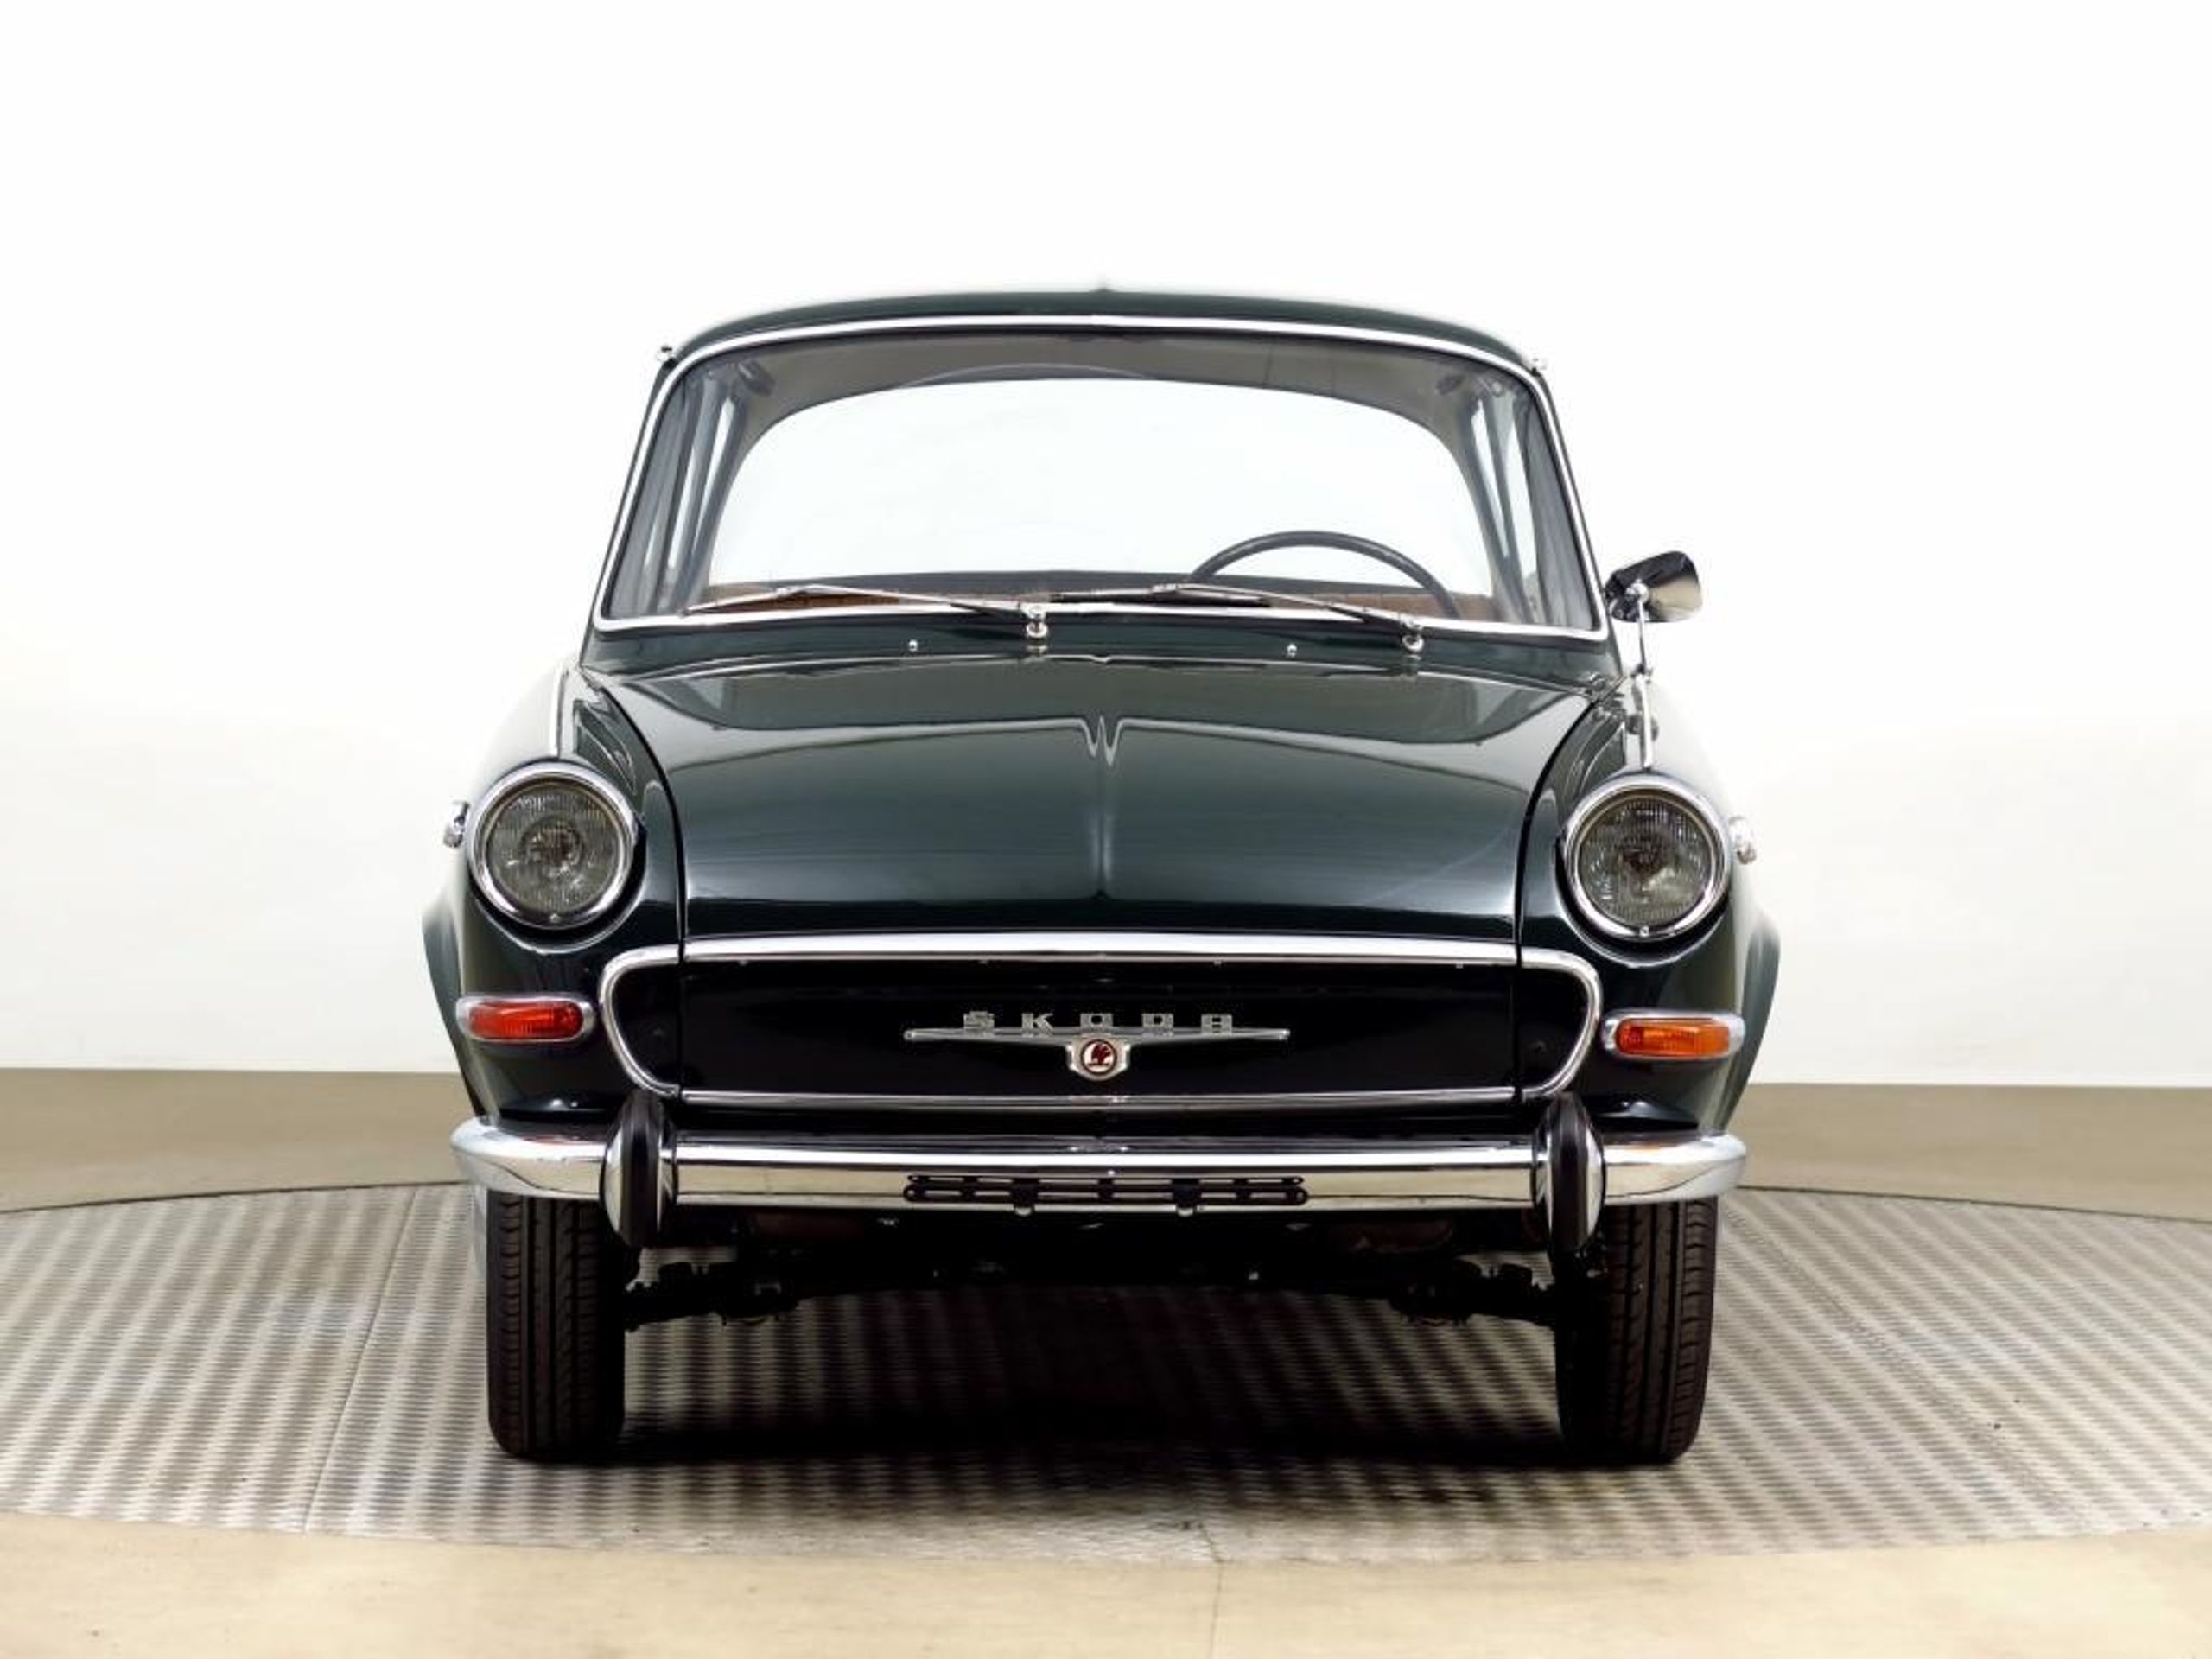 Škoda 1000 MBX z roku 1967 - 9 - Fotogalerie: Tahle stařičká embéčka mají dnes obrovskou hodnotu (21/35)